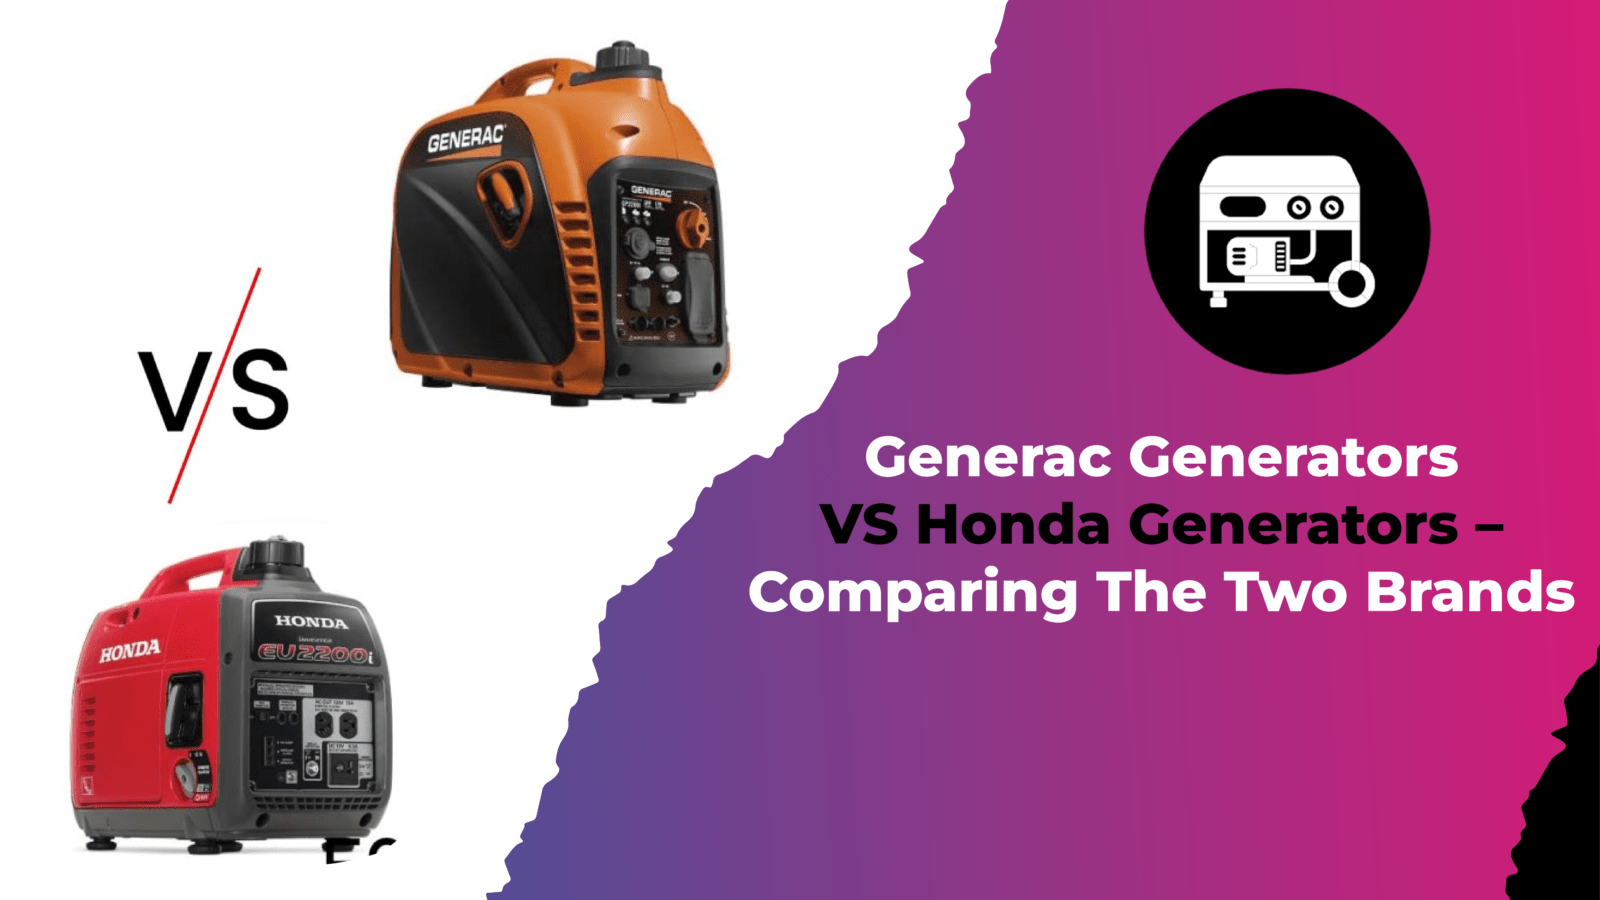 Generac Generators VS Honda Generators - Comparing The Two Brands